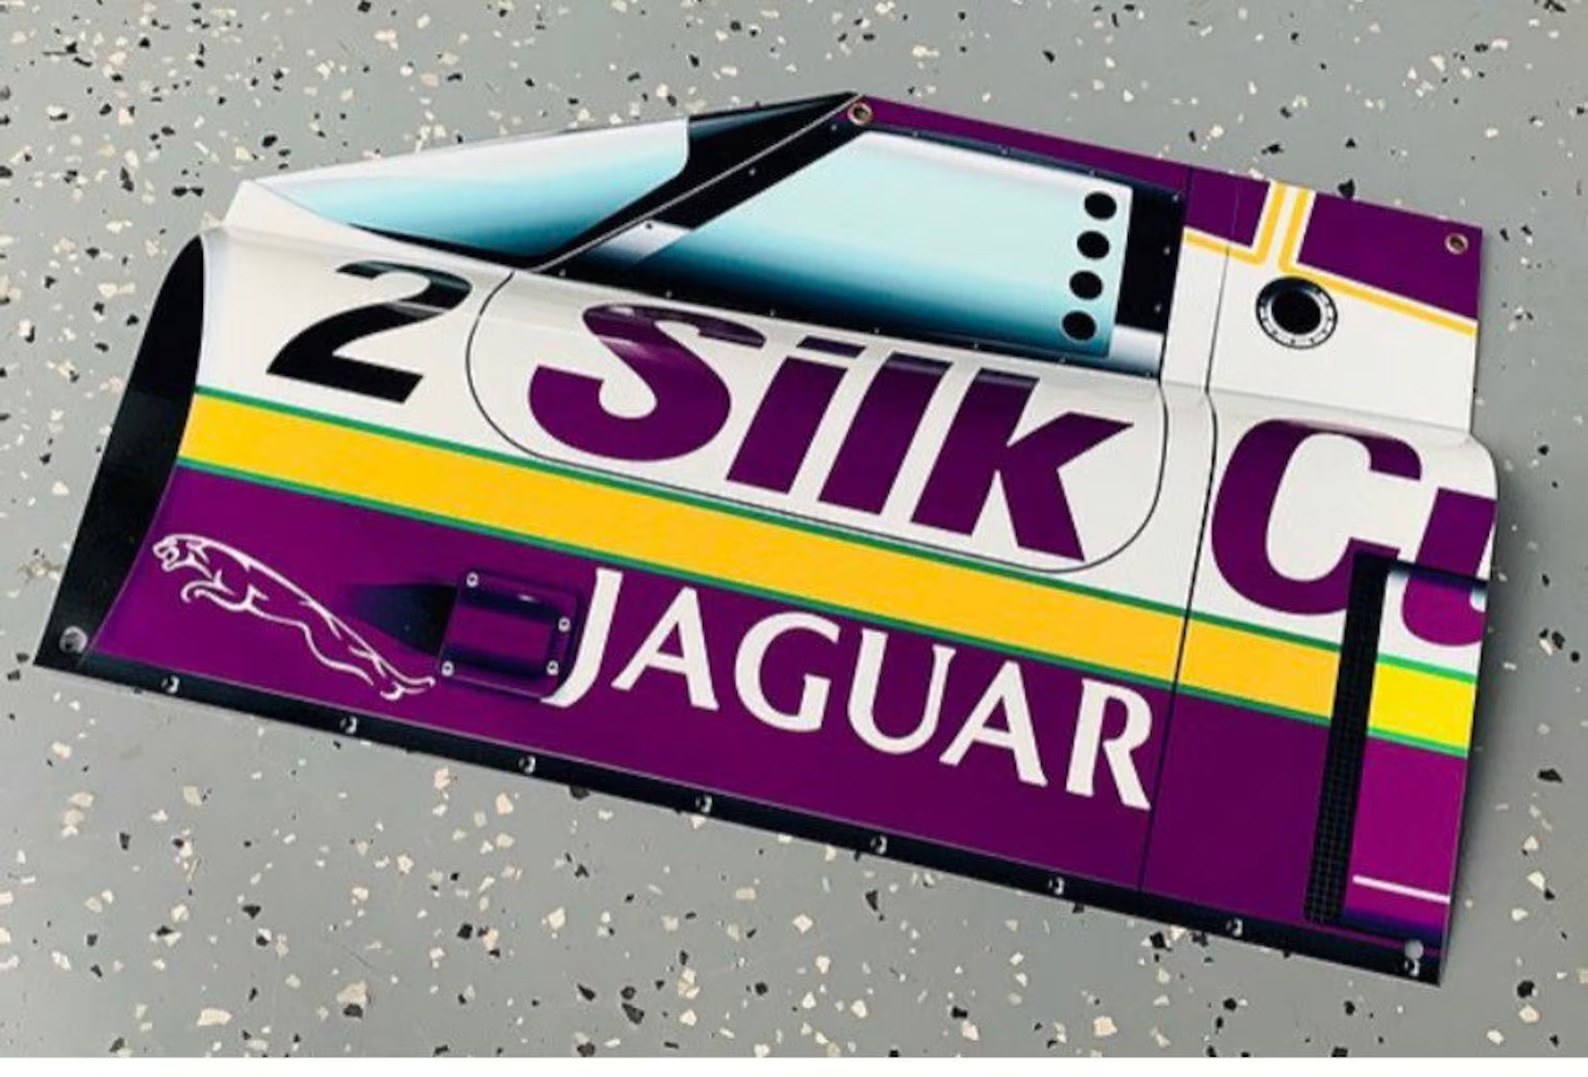 Jaguar XJR9 Wall Display - Image 5 of 5